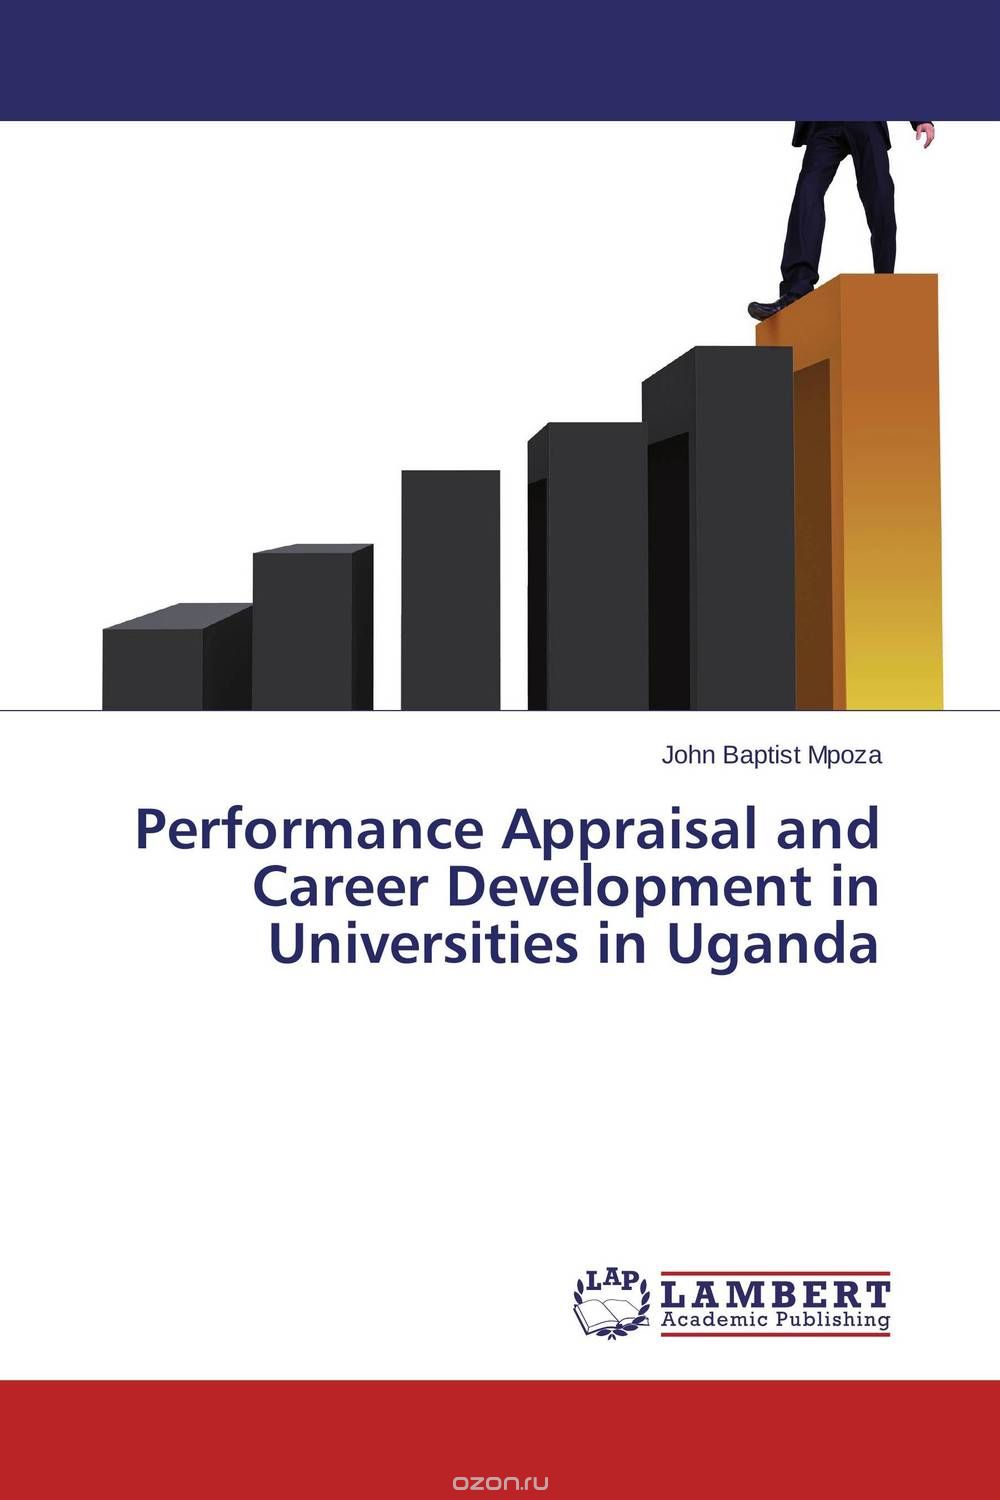 Скачать книгу "Performance Appraisal and Career Development in Universities in Uganda"